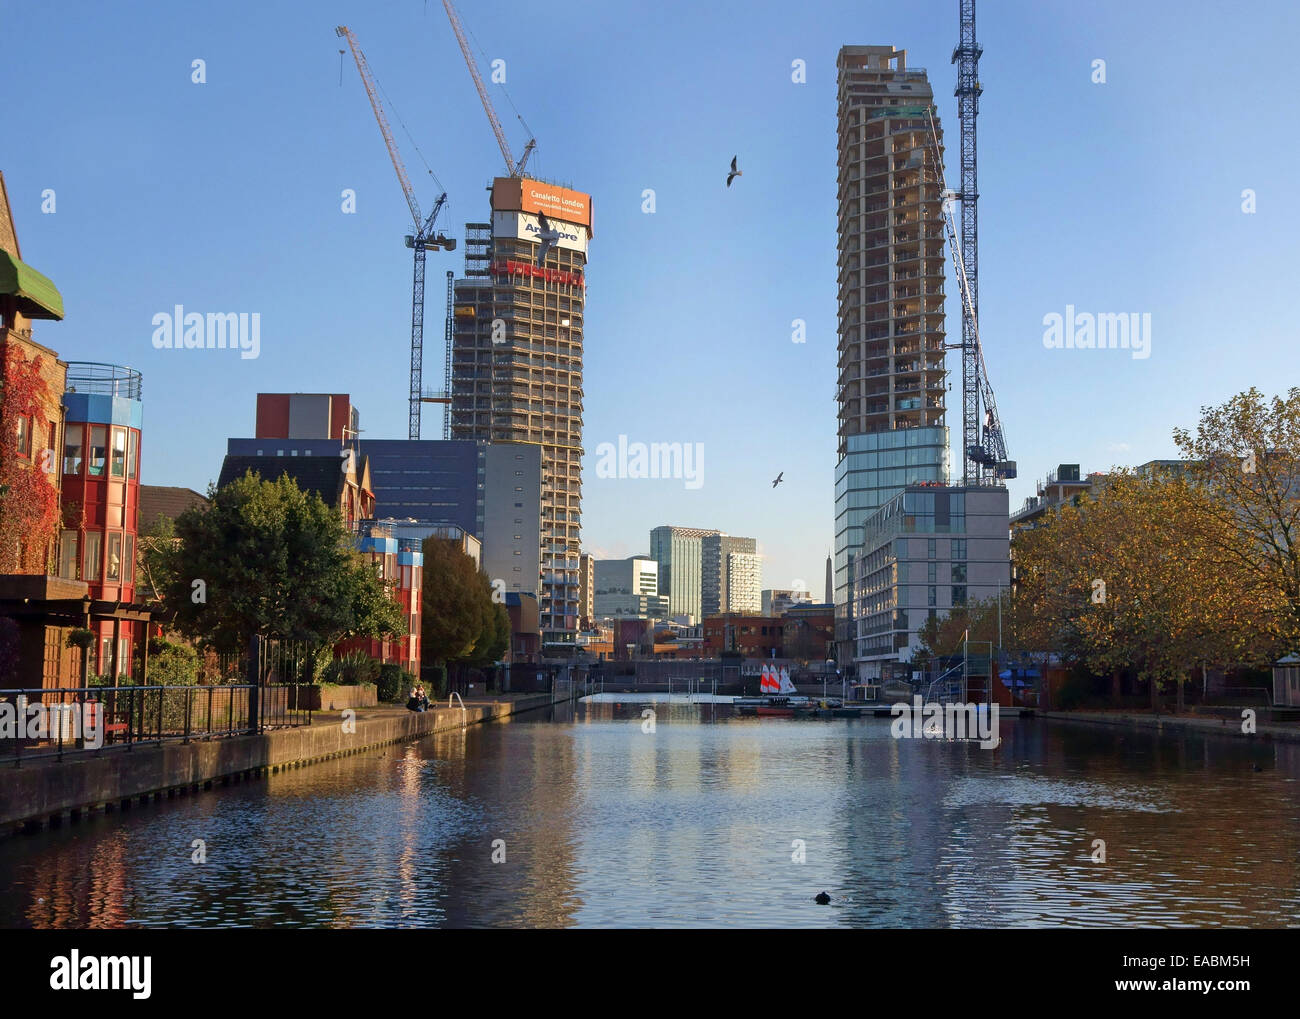 Canaletto (L) and Lexicon luxury flats developments in City Basin, Islington, London Stock Photo